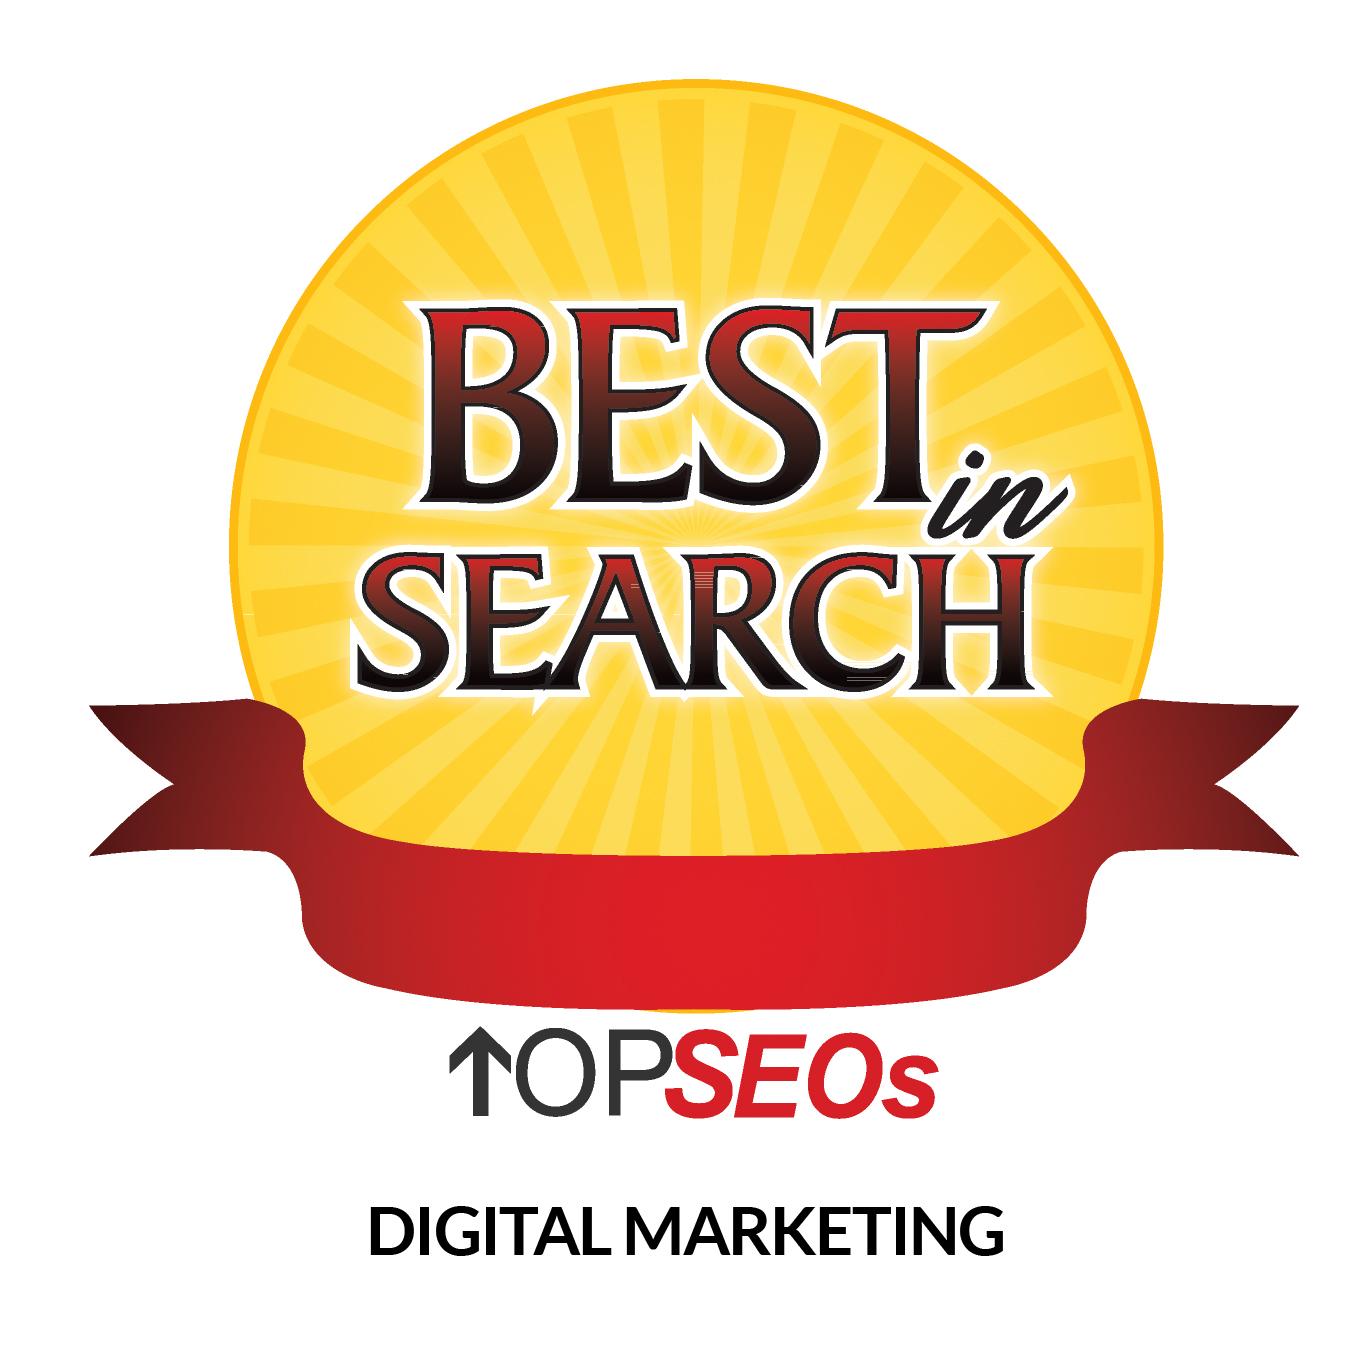 topseos best digital marketing company website badge